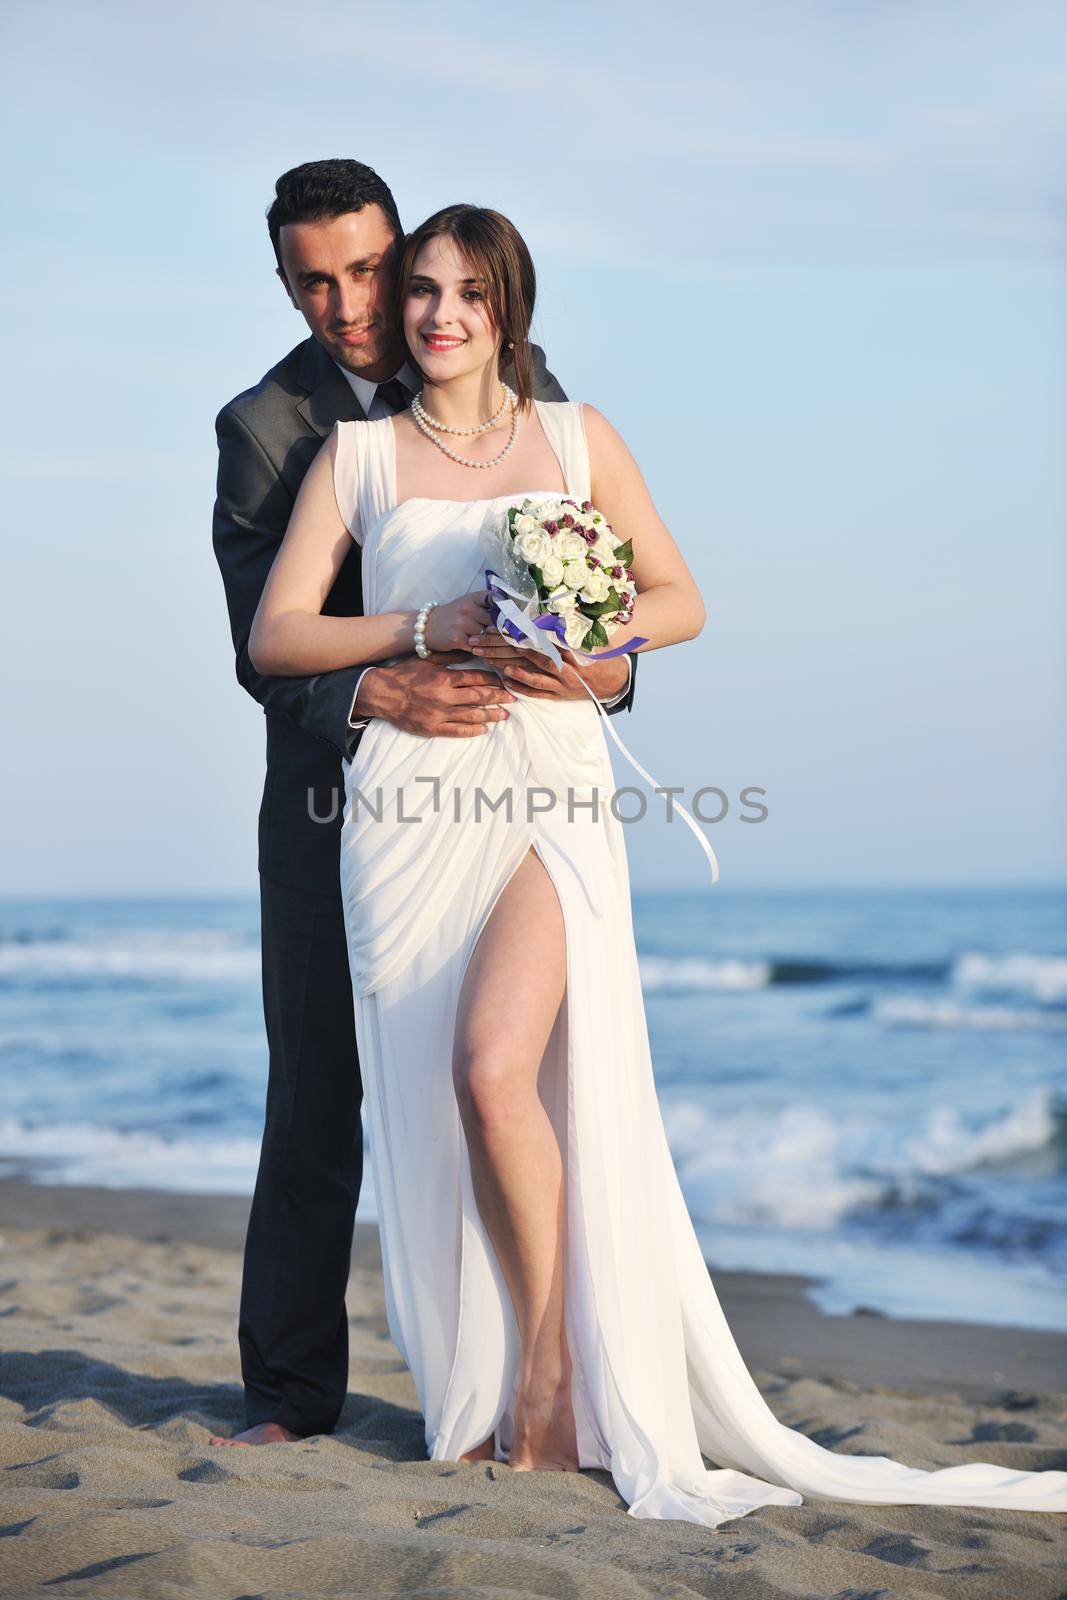 romantic beach wedding at sunset by dotshock